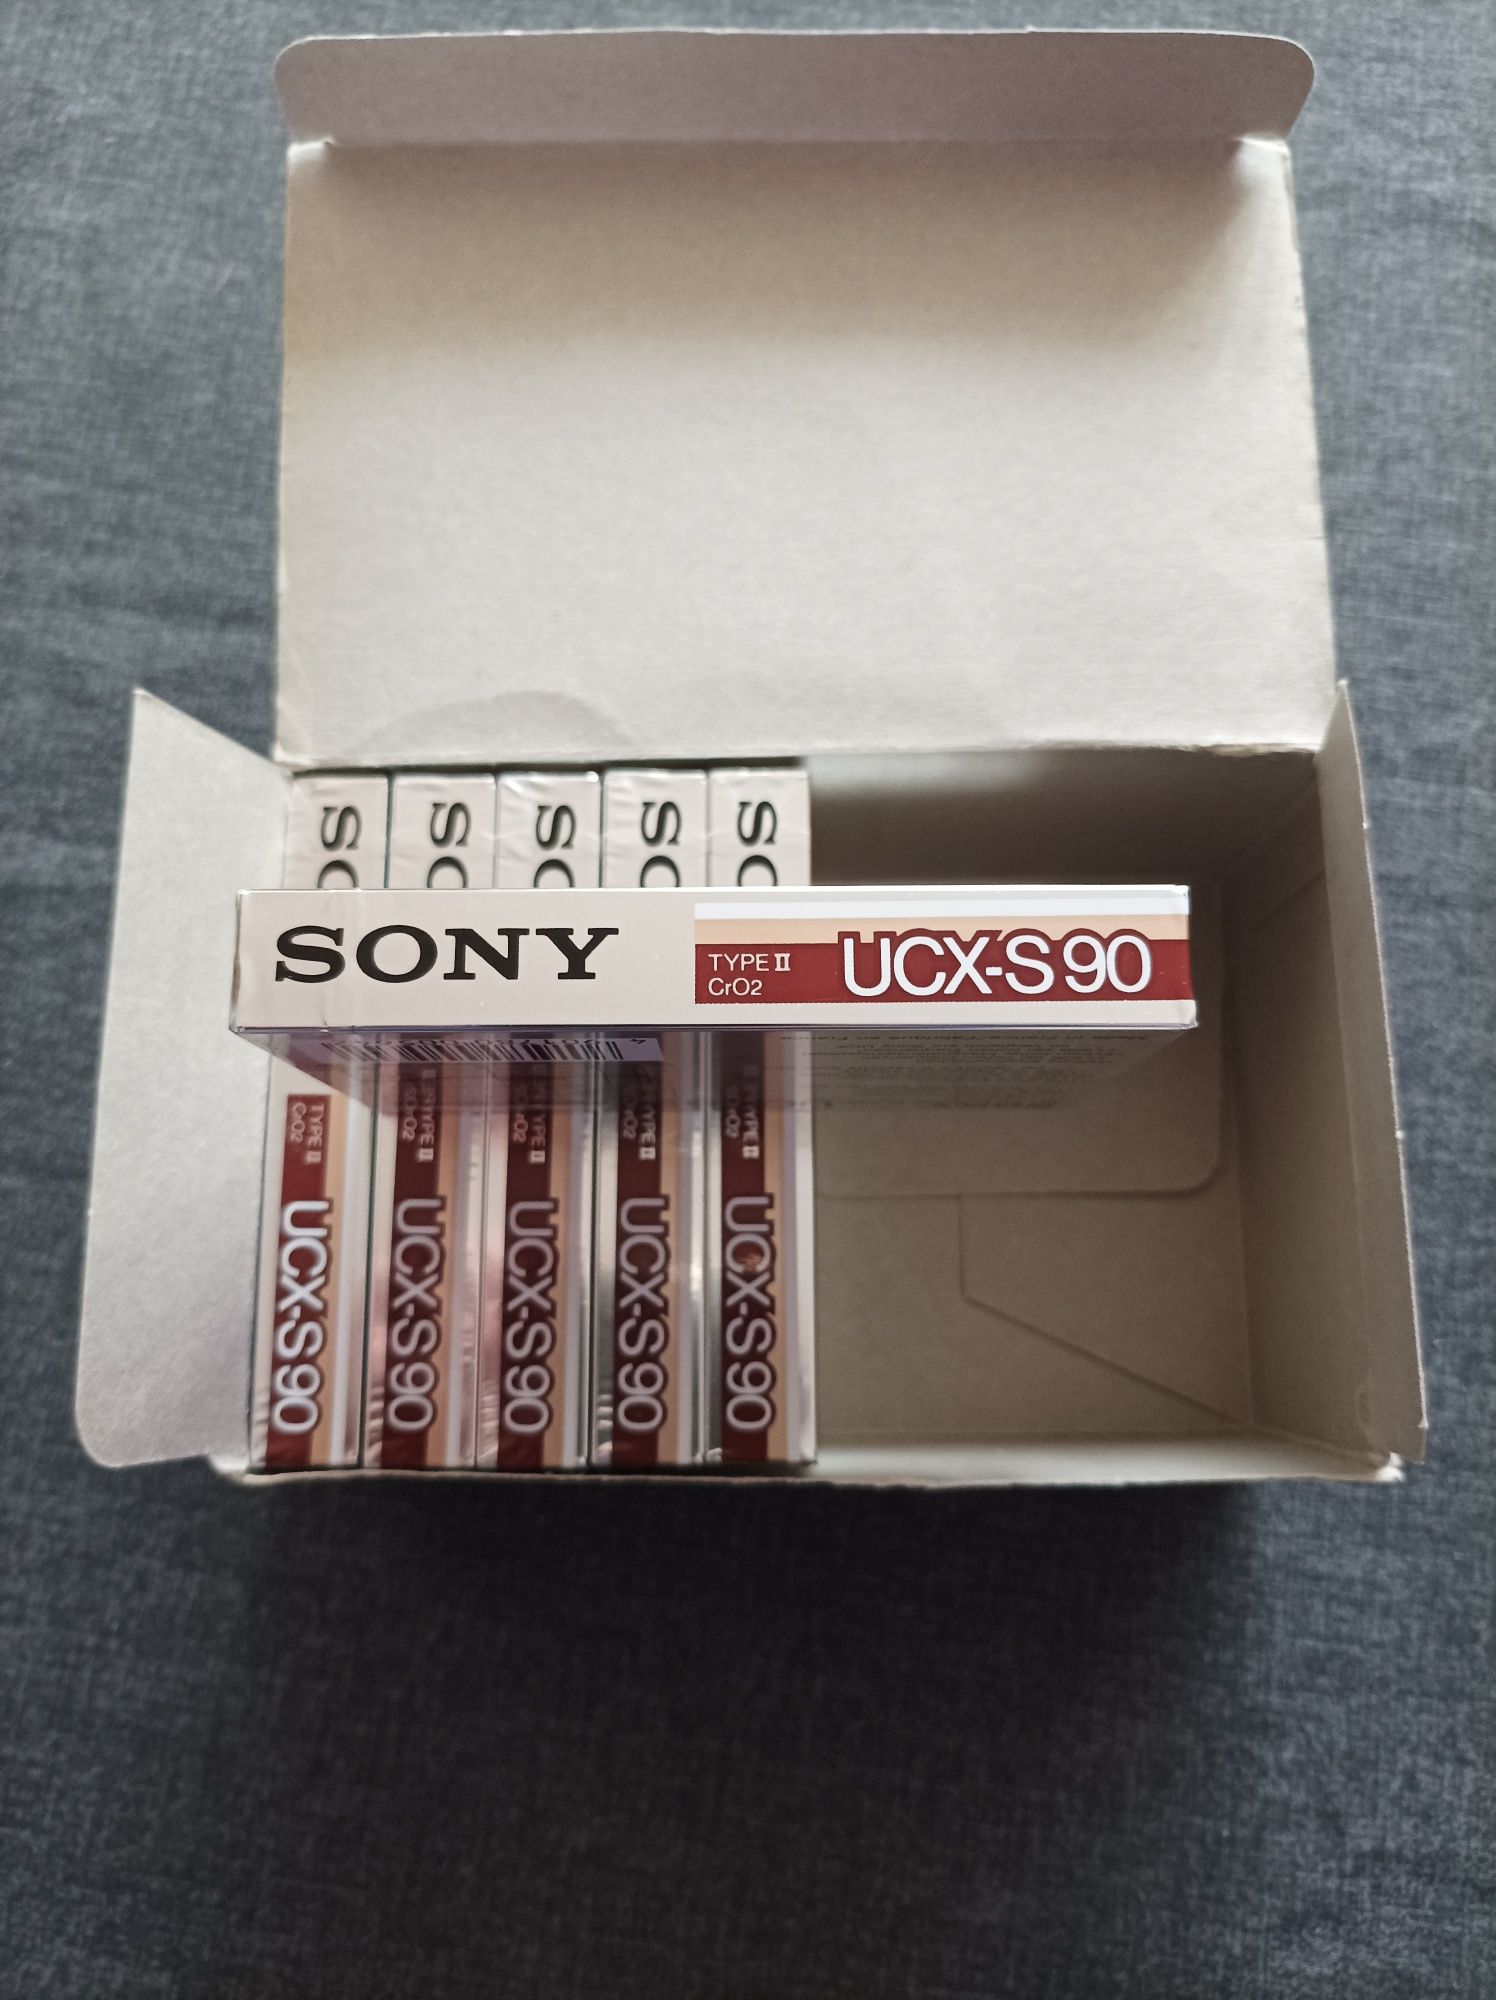 Kaseta Sony UCX-S 90 Super Chrom CrO2 1985 rok